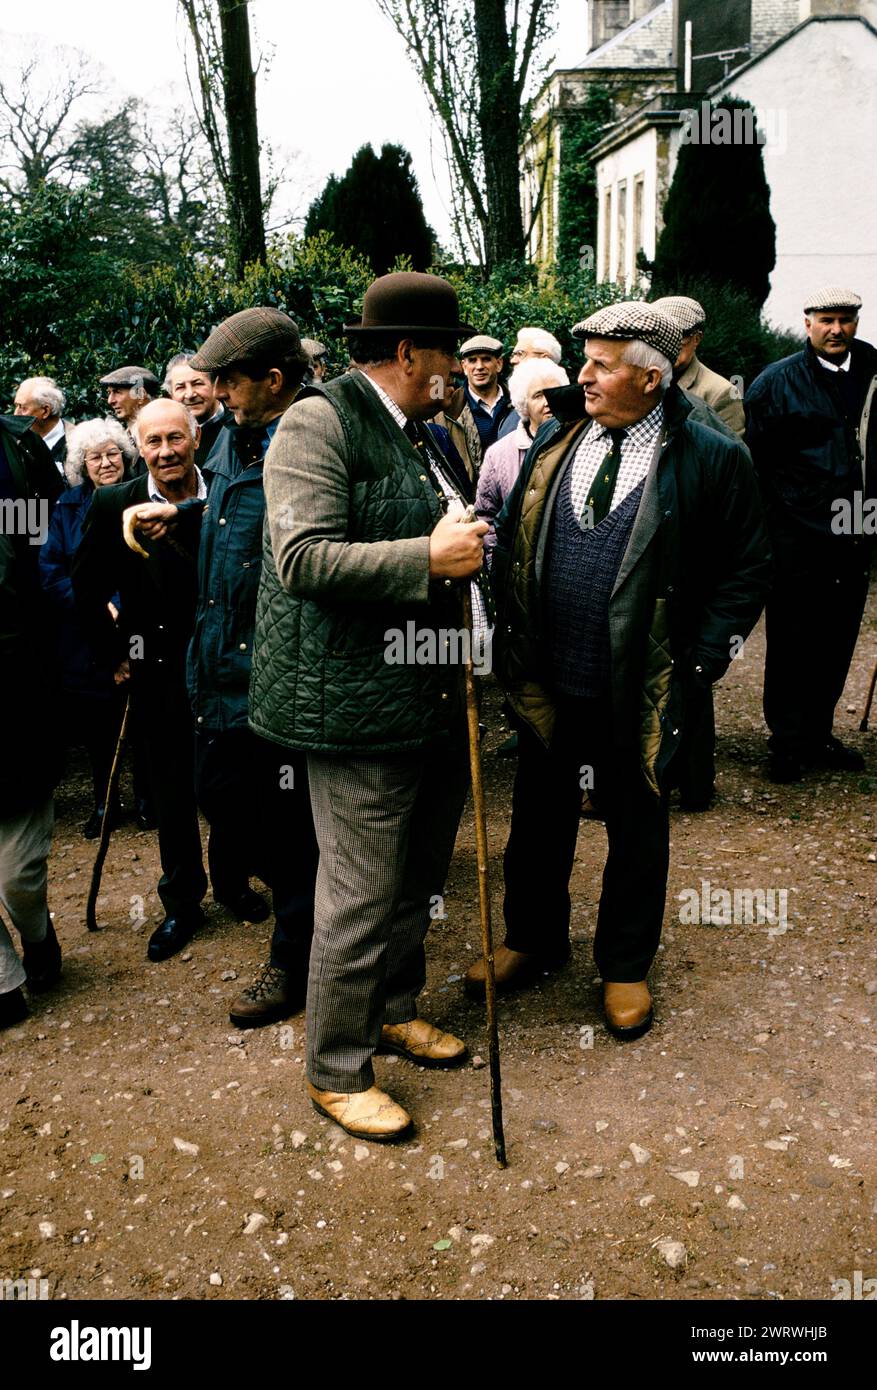 Hunt Foot Follower at Lawn trifft auf Bagborough House, das letzte Treffen der Jagdsaison Quantock Staghounds 1990s UK. Quantock Hills Somerset. 1997. England HOMER SYKES Stockfoto